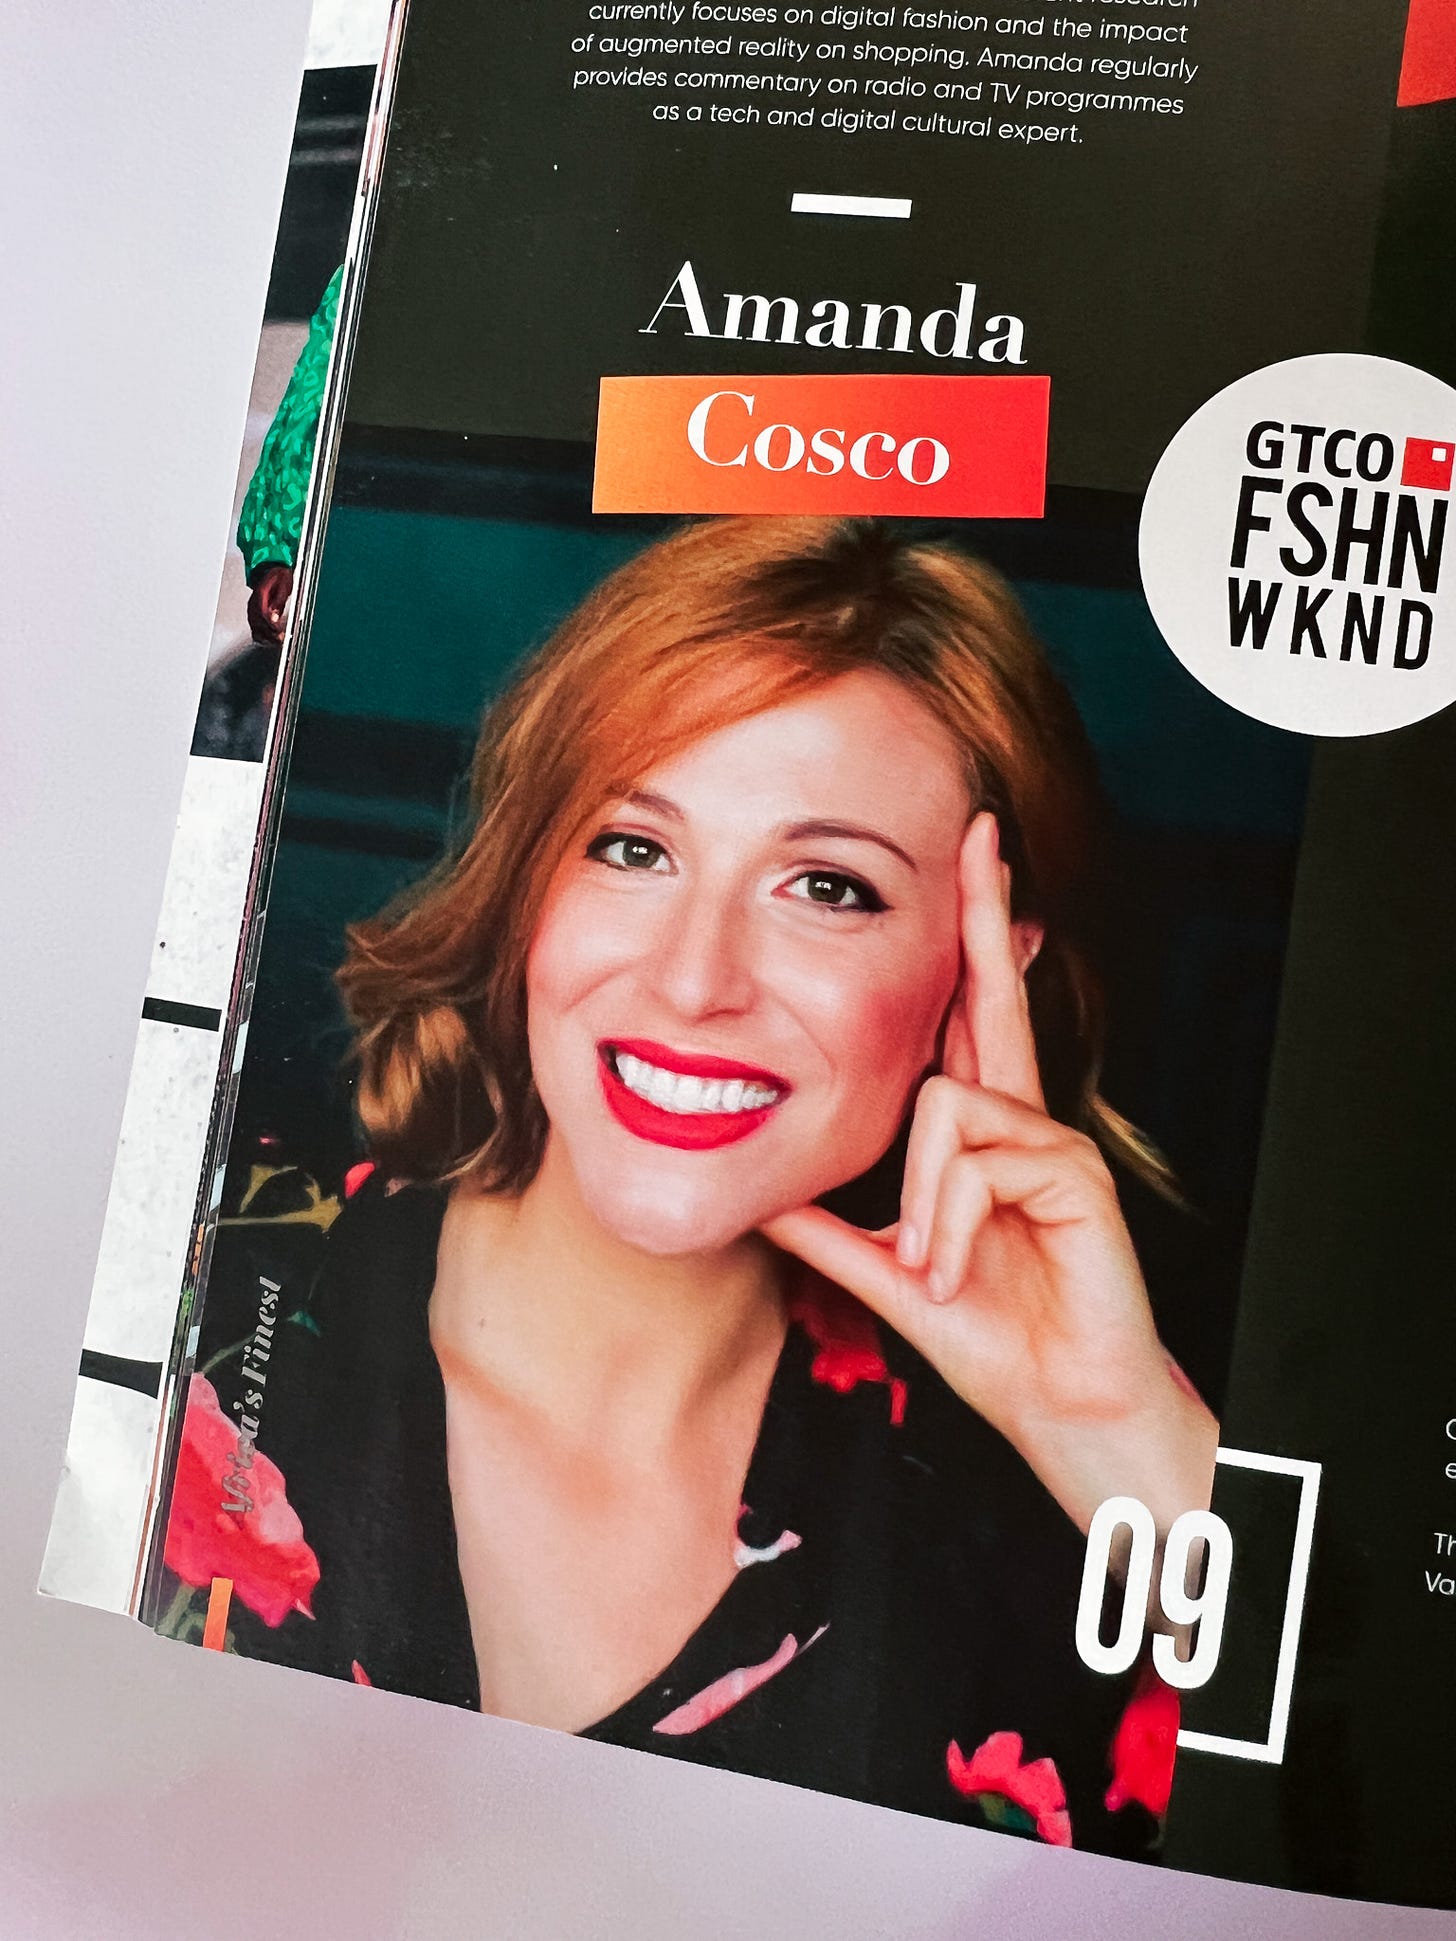 Image of GTCO Fashion Weekend Magazine Opened to page with Amanda Cosco's headshot and bio